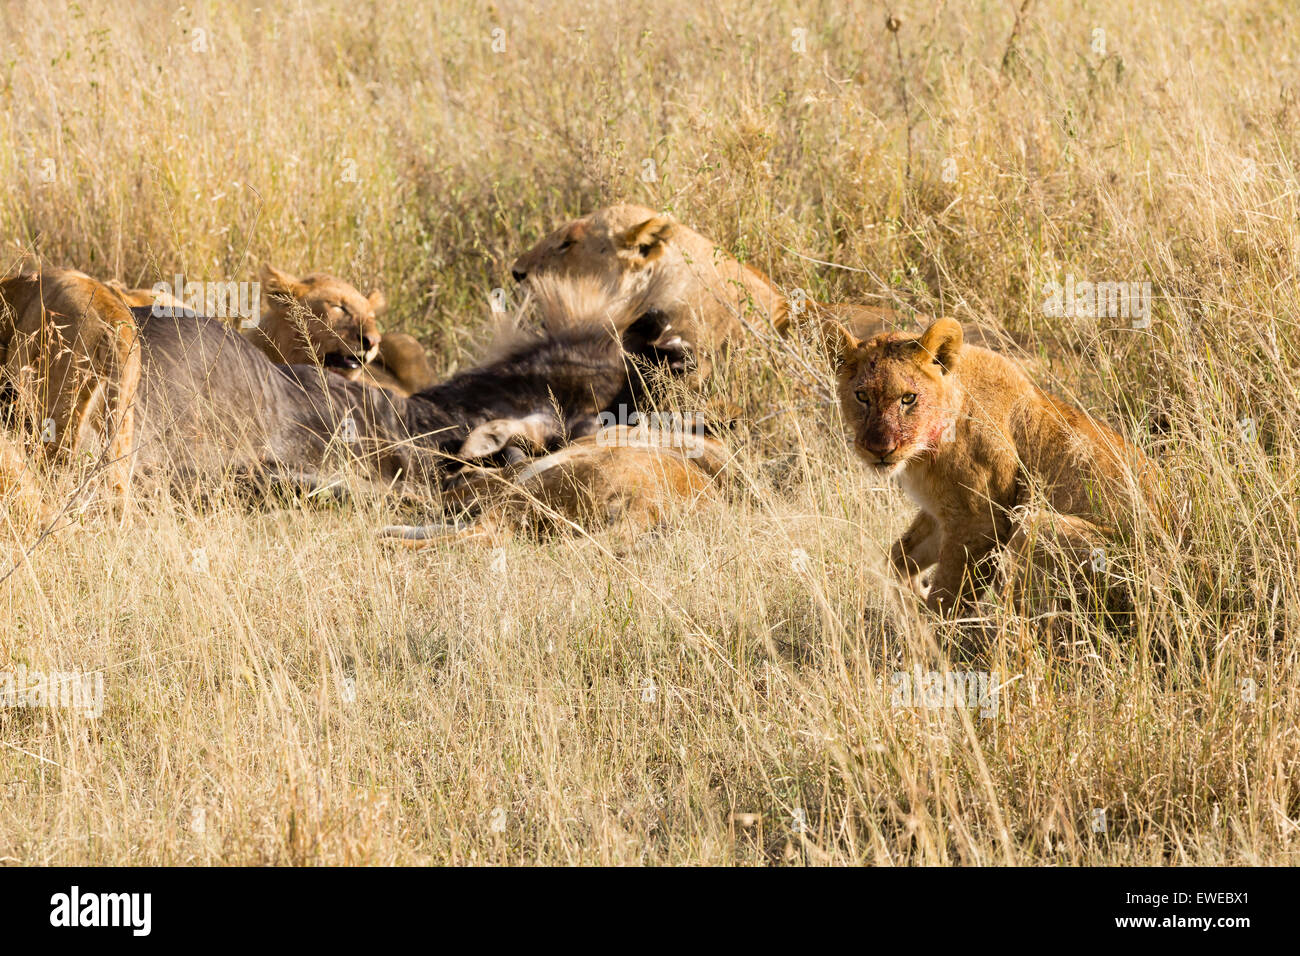 Pride of lions (Panthera leo) feeding on a Wildebeest (Connochaetes taurinus) in the Serengeti Tanzania Stock Photo